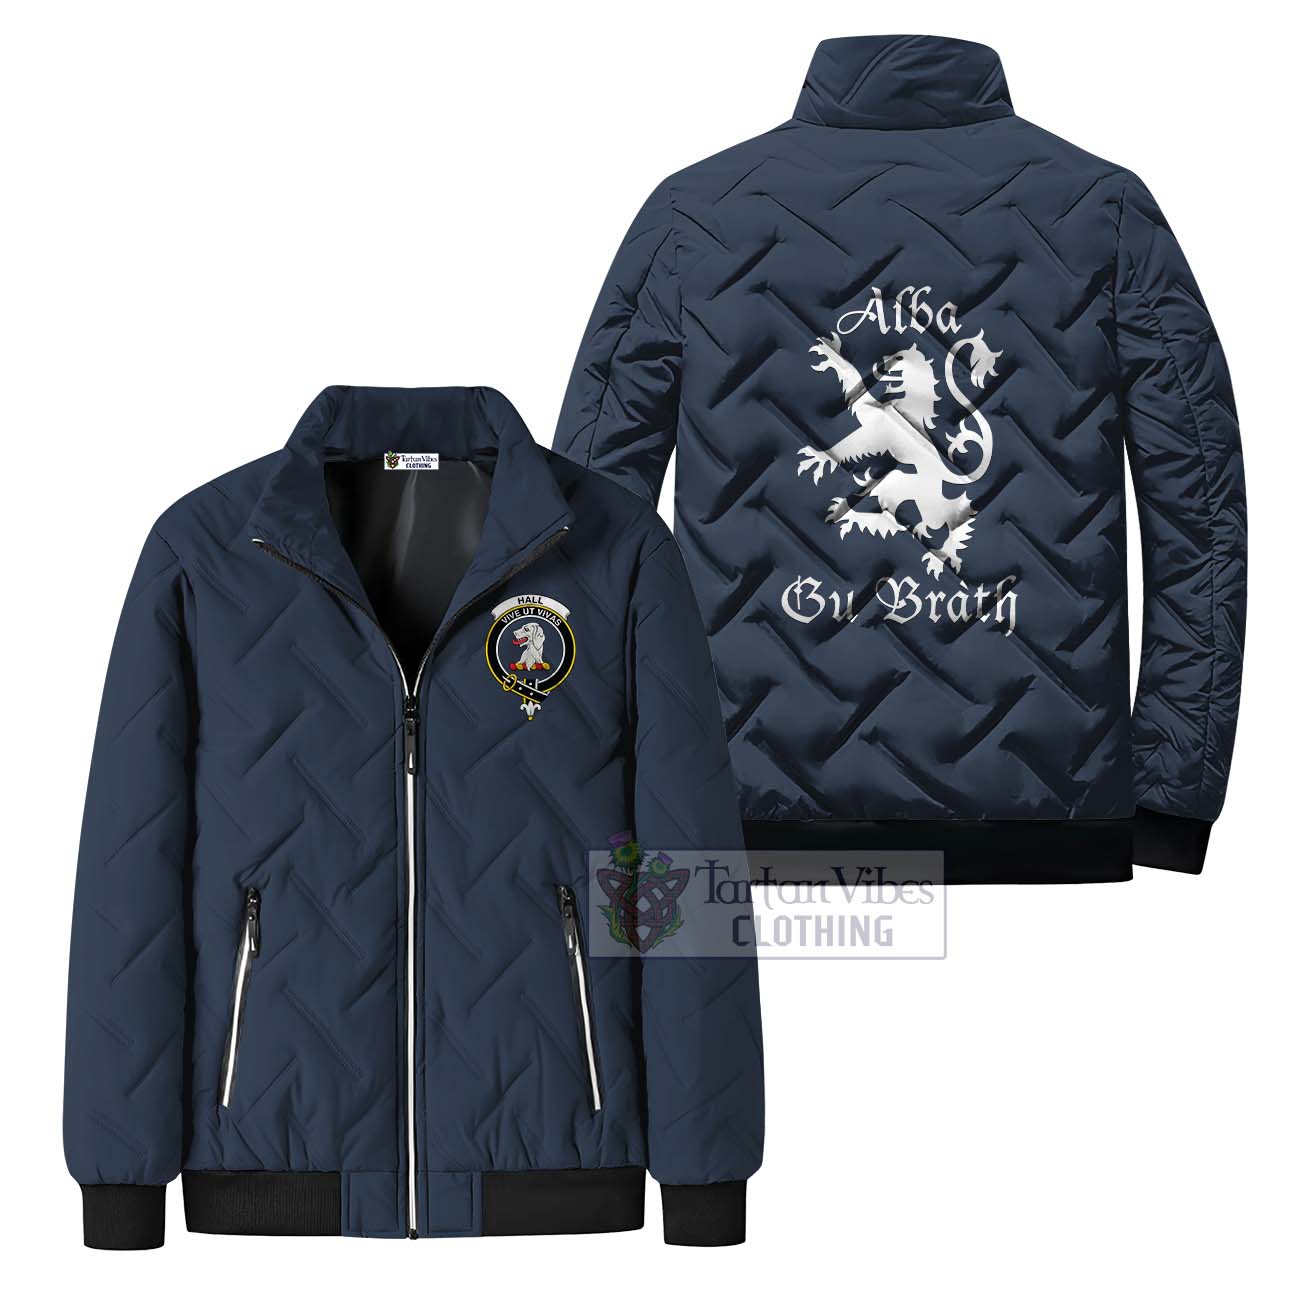 Tartan Vibes Clothing Hall Family Crest Padded Cotton Jacket Lion Rampant Alba Gu Brath Style